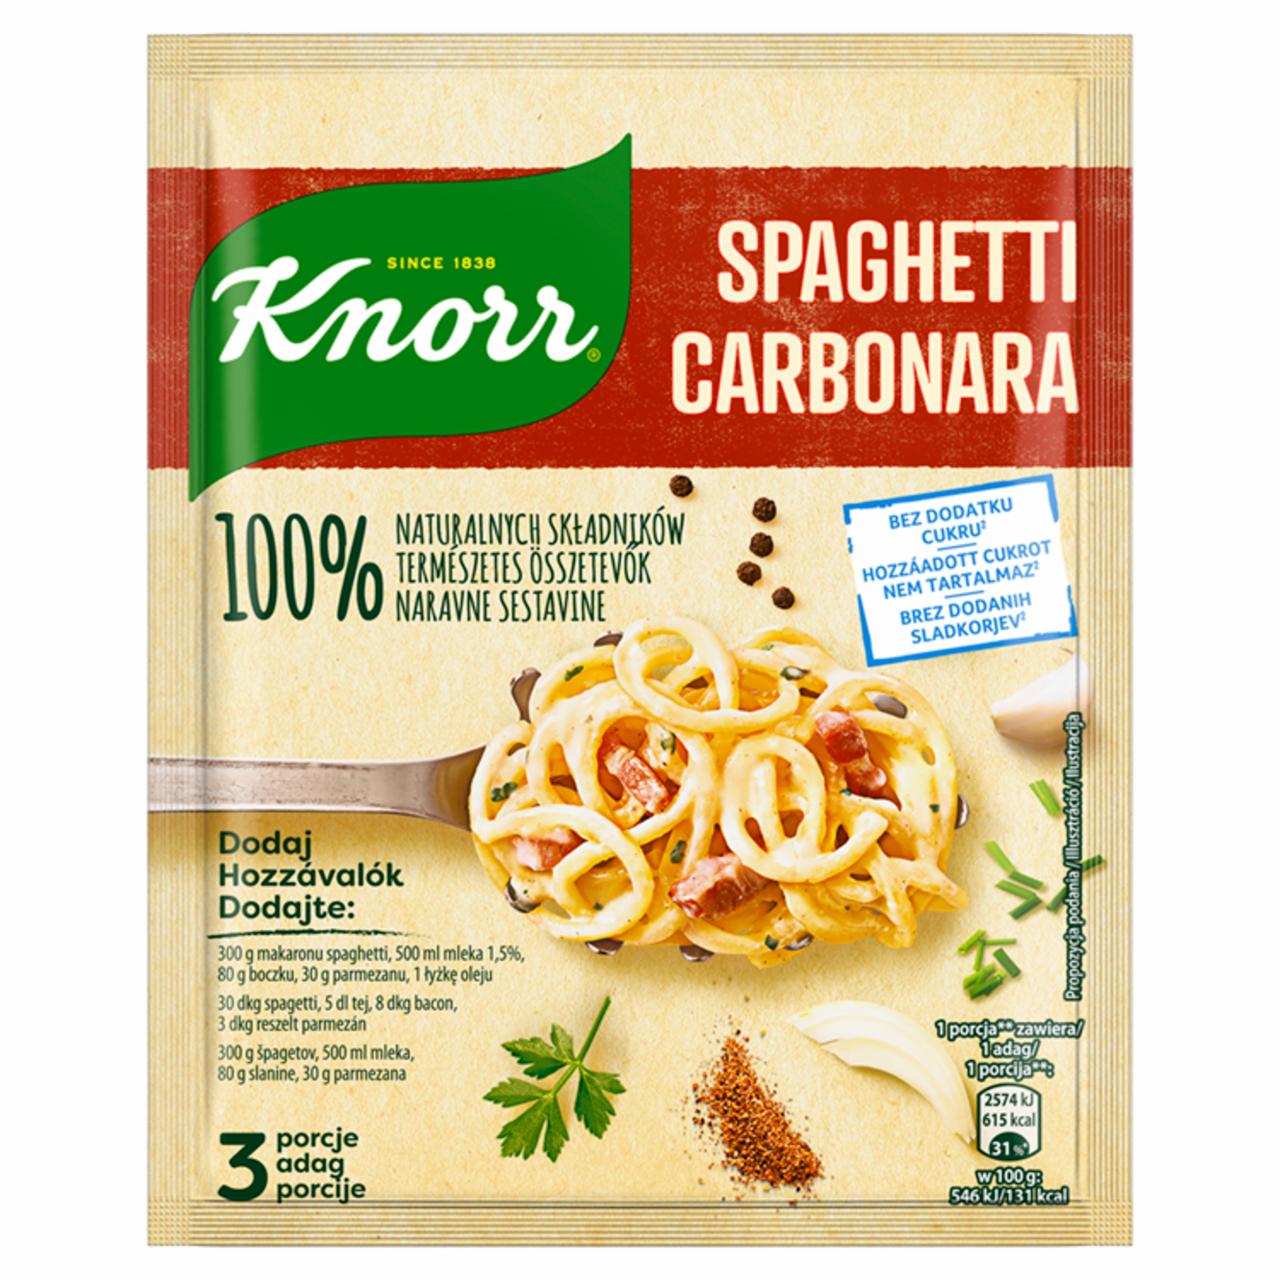 Képek - Knorr carbonara spagetti alap 42 g